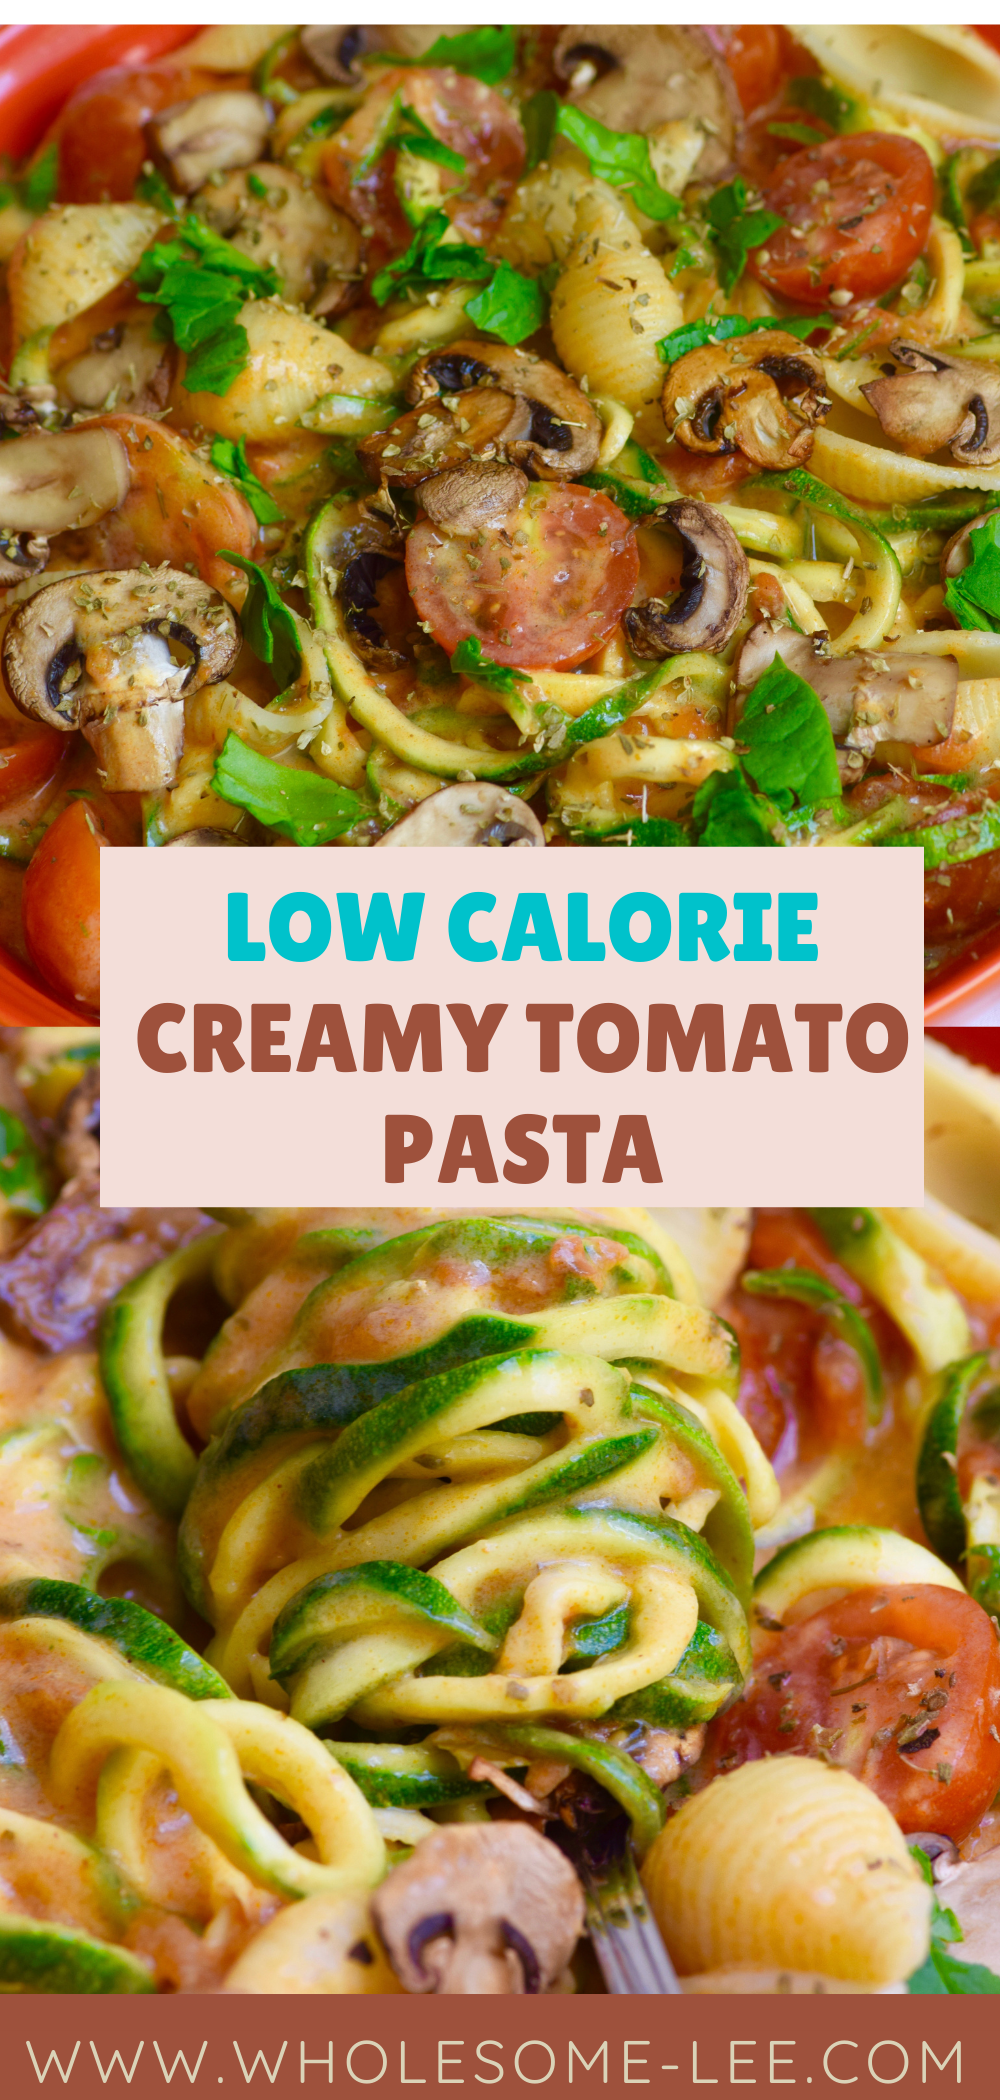 Low calorie creamy tomato pasta